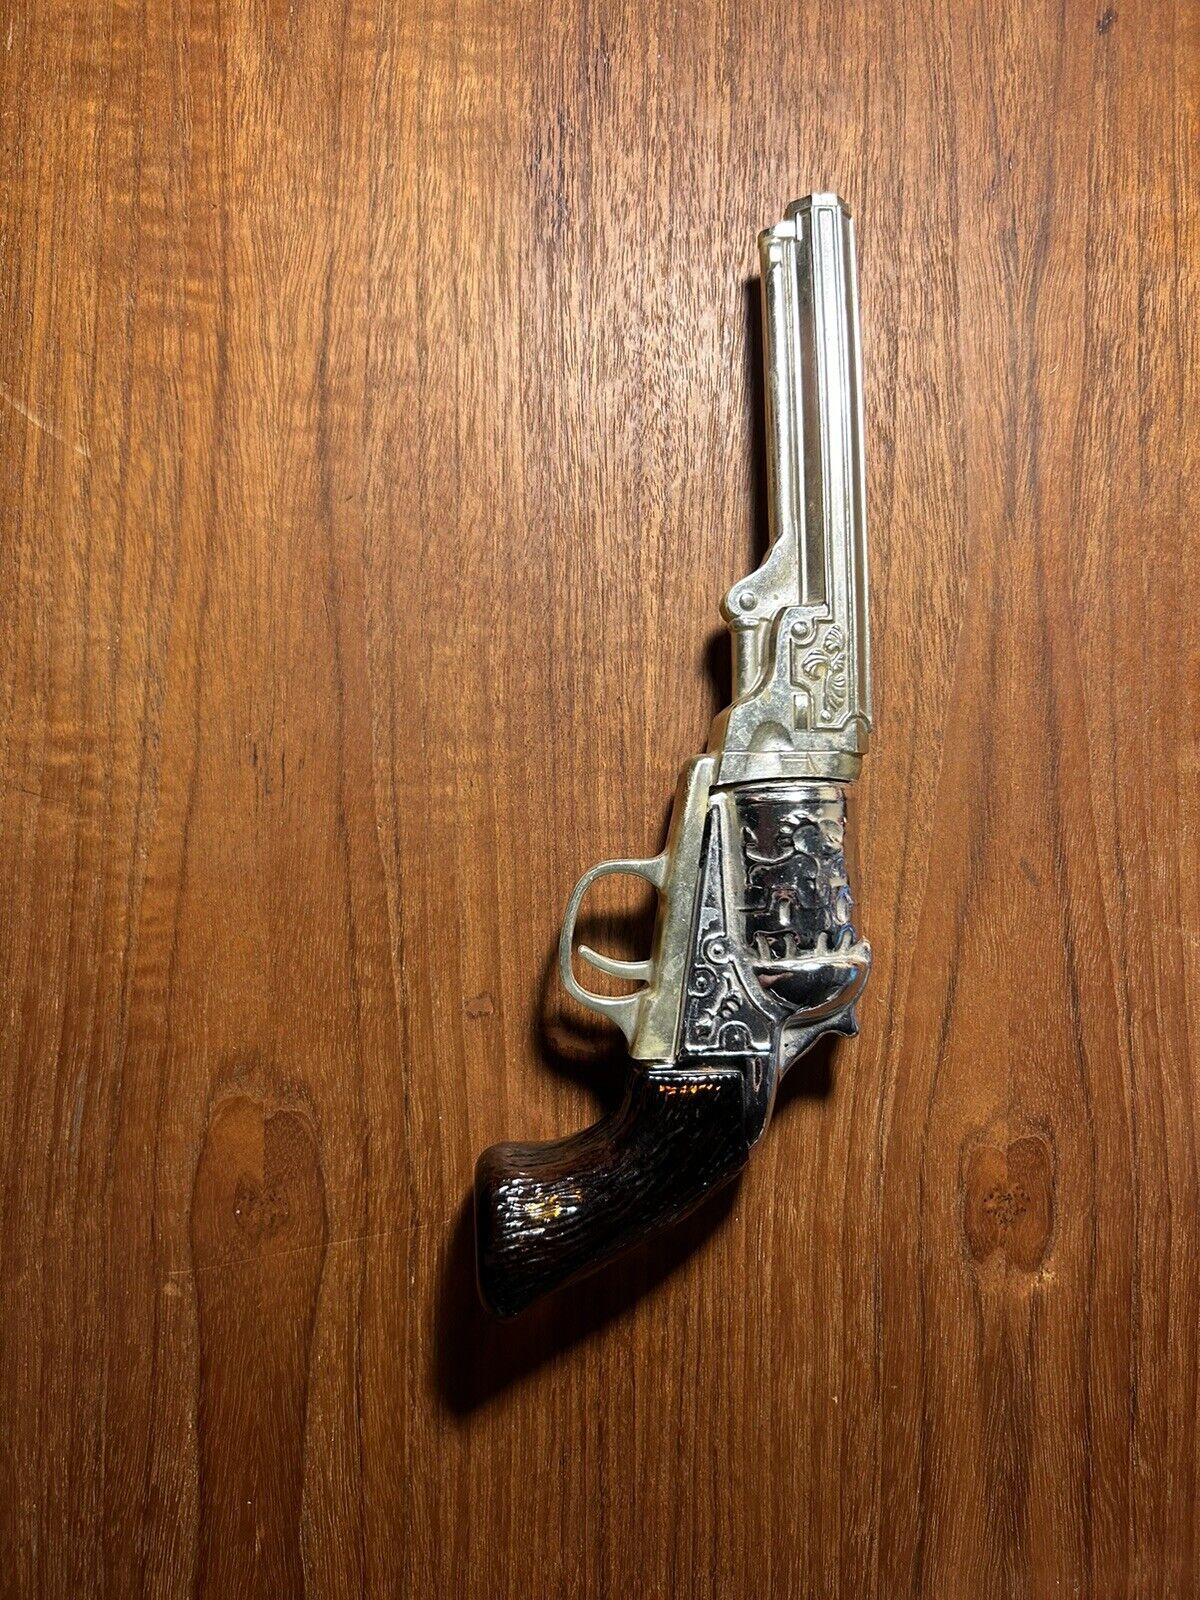 Vintage Avon Colt Revolver (1851) With “Deep Woods”  After Shave Cologne